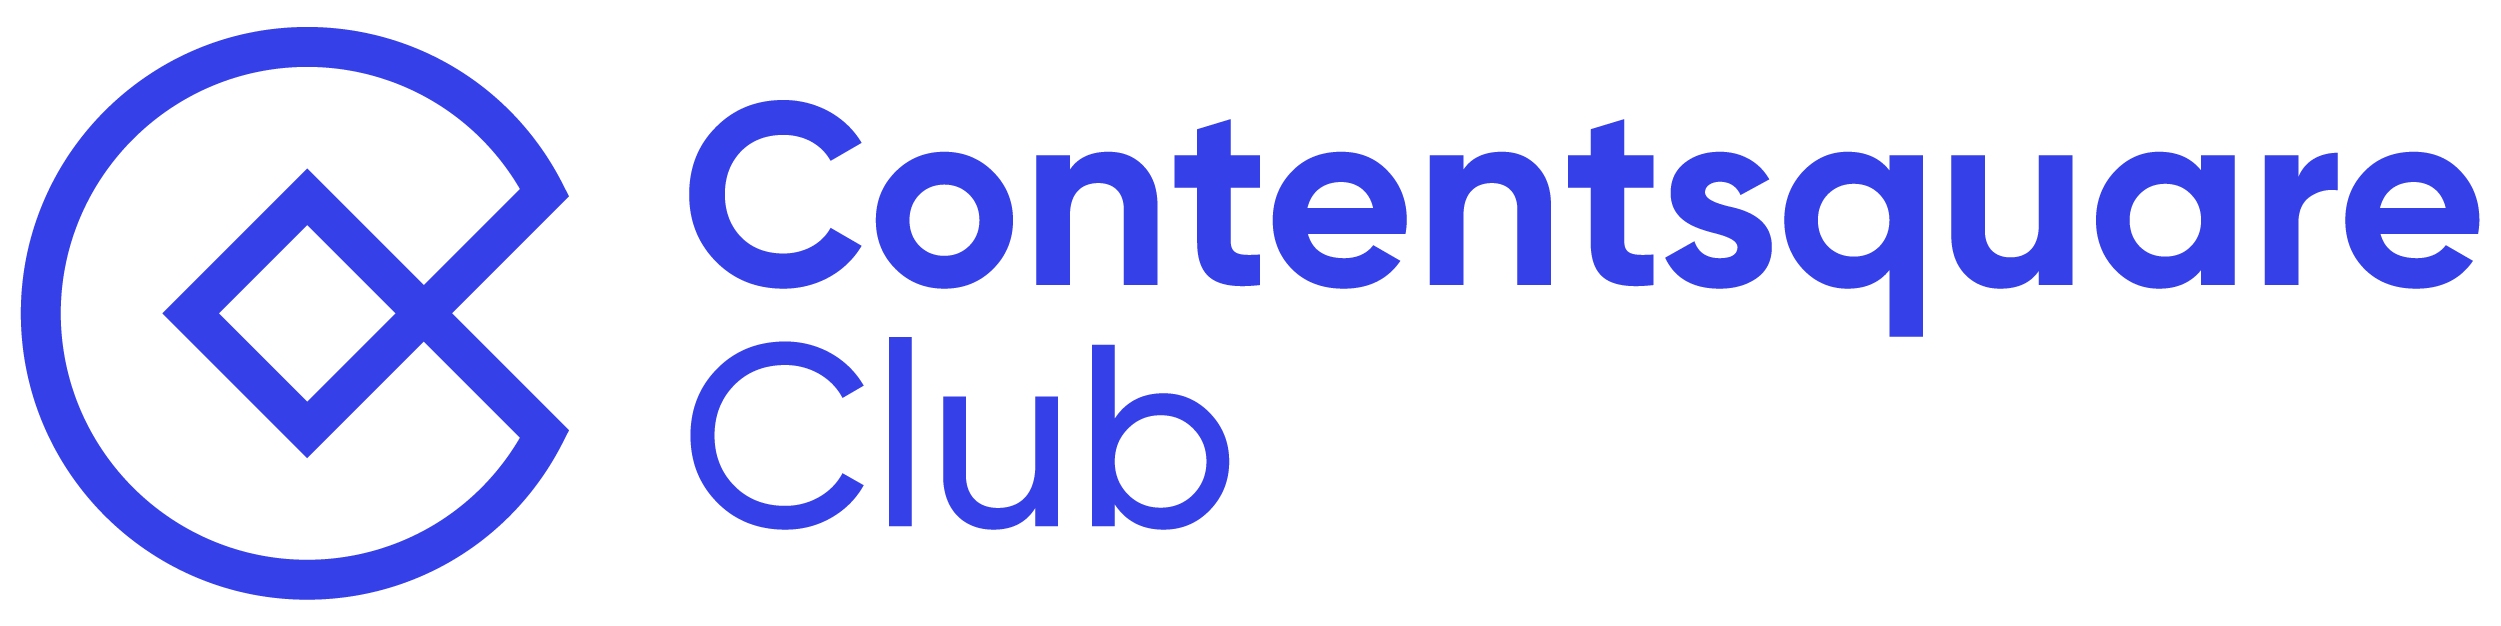 Contentsquare Club - Logo_Vivid blue